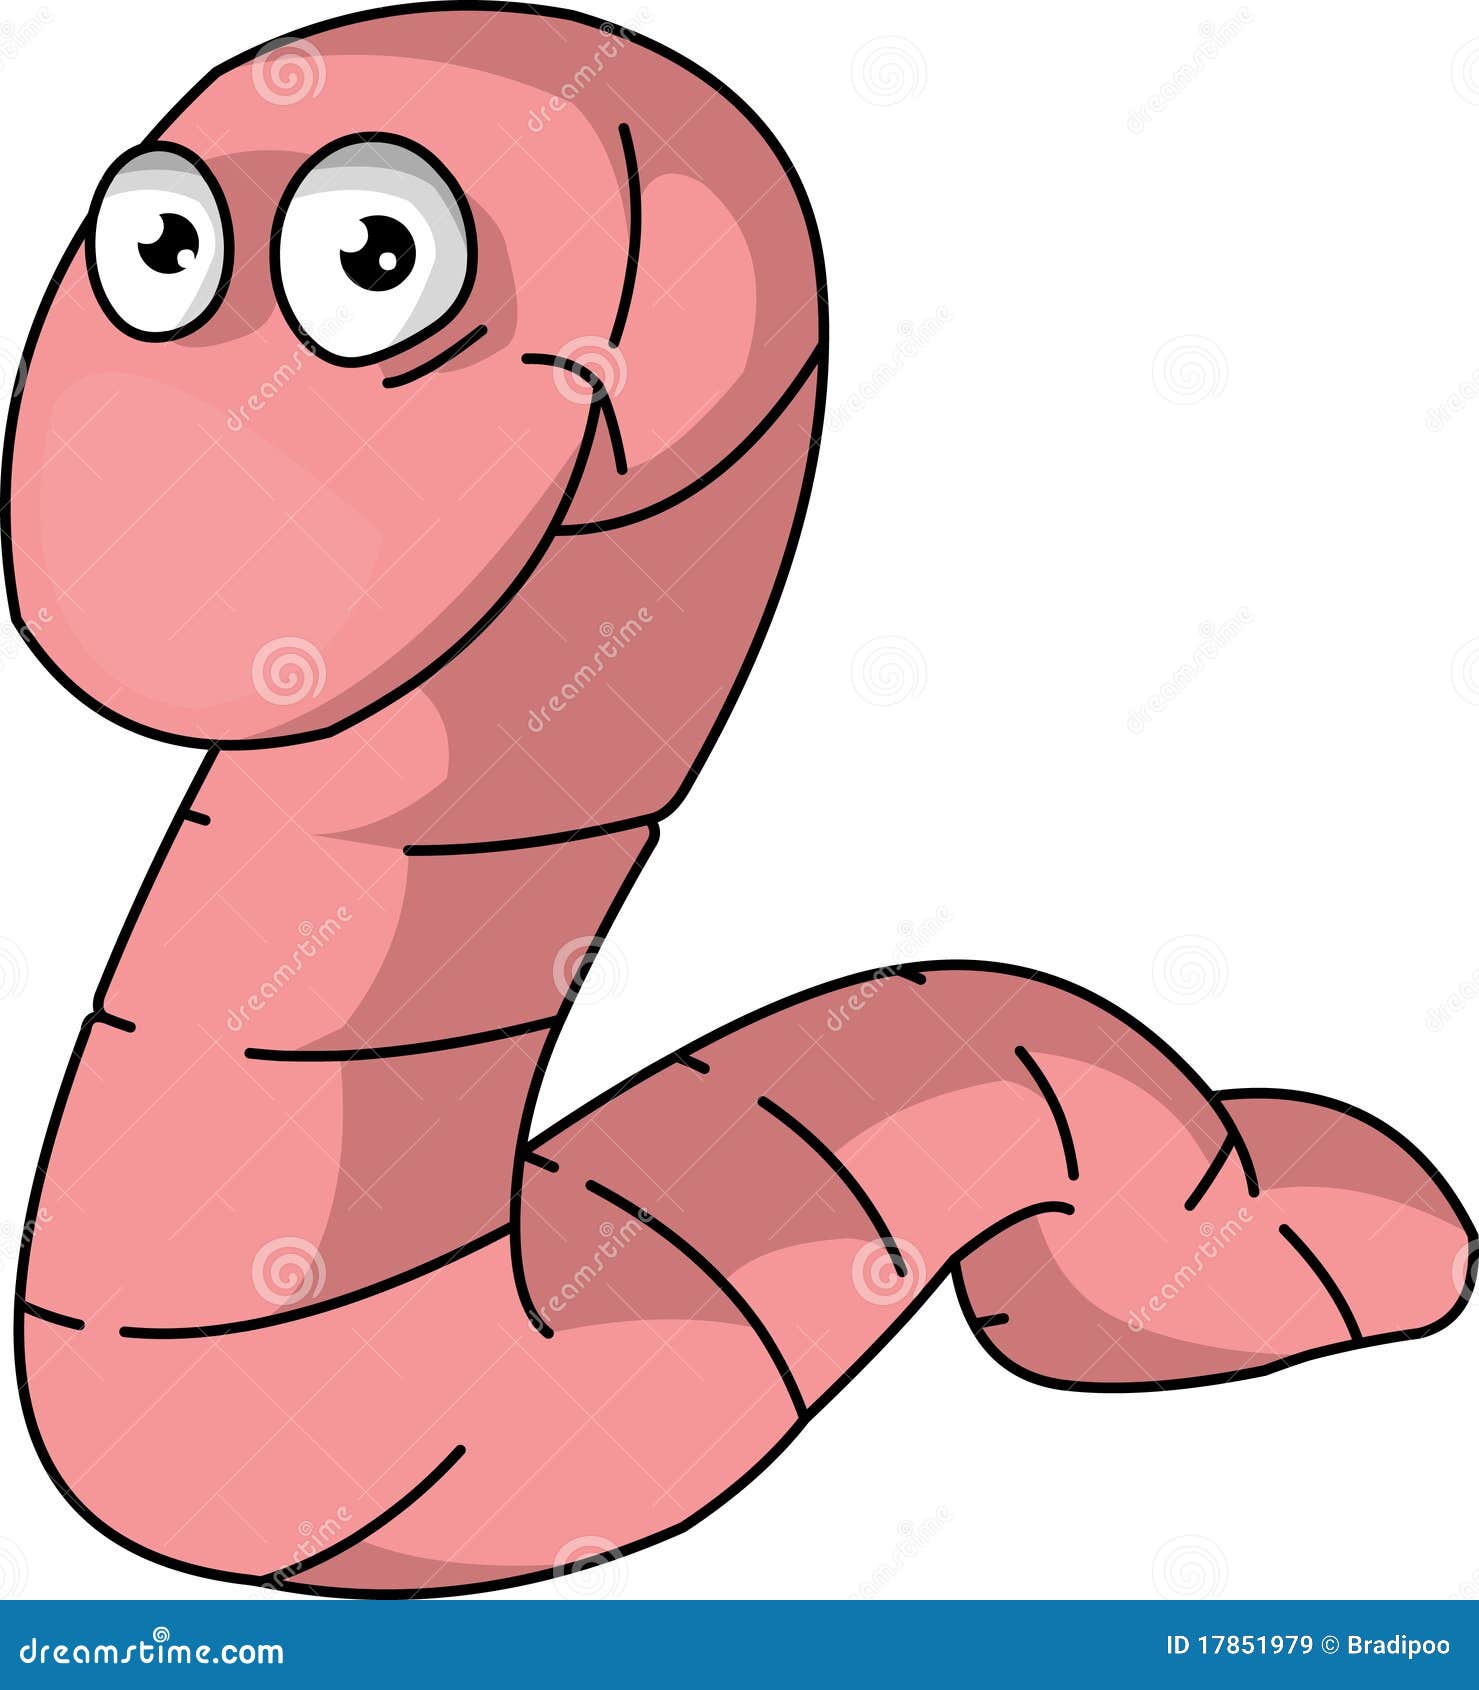 free earthworm clipart - photo #45